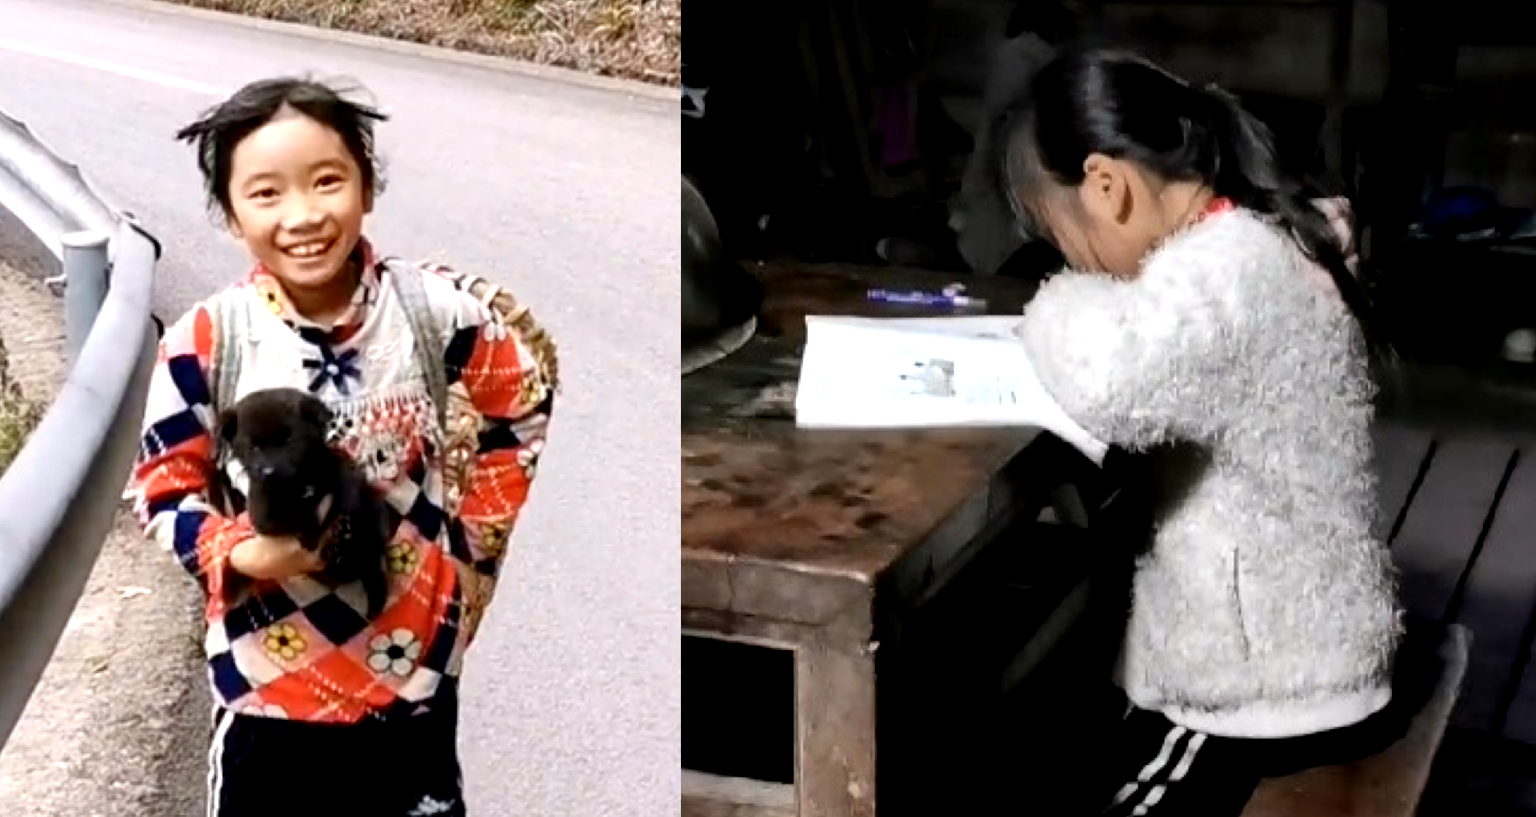 Chinese girl treks alone for 40 minutes to ask stranger for homework help